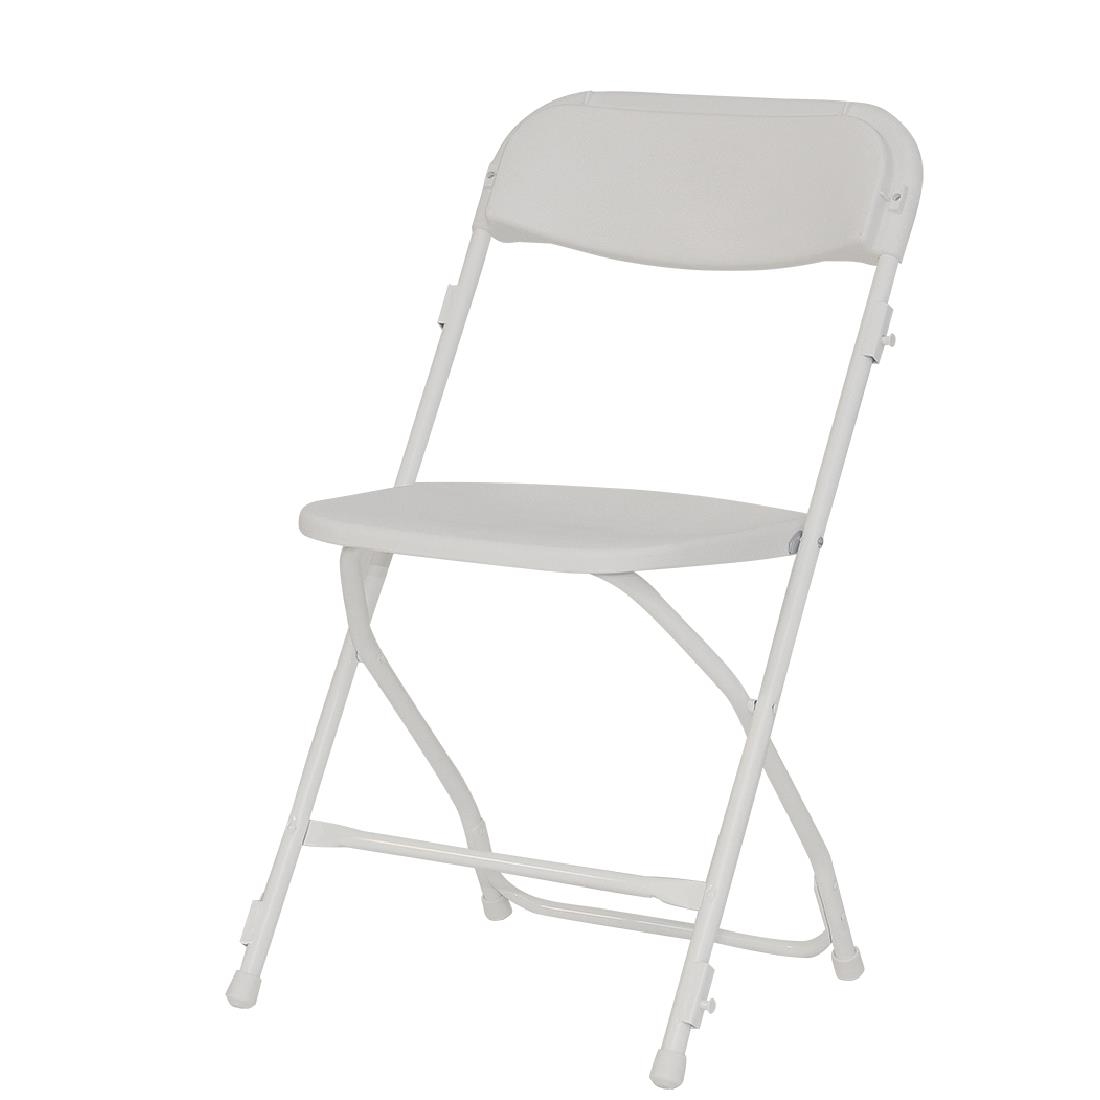 ZOWN Alex-K Folding Sidechairs White (Pack of 8)